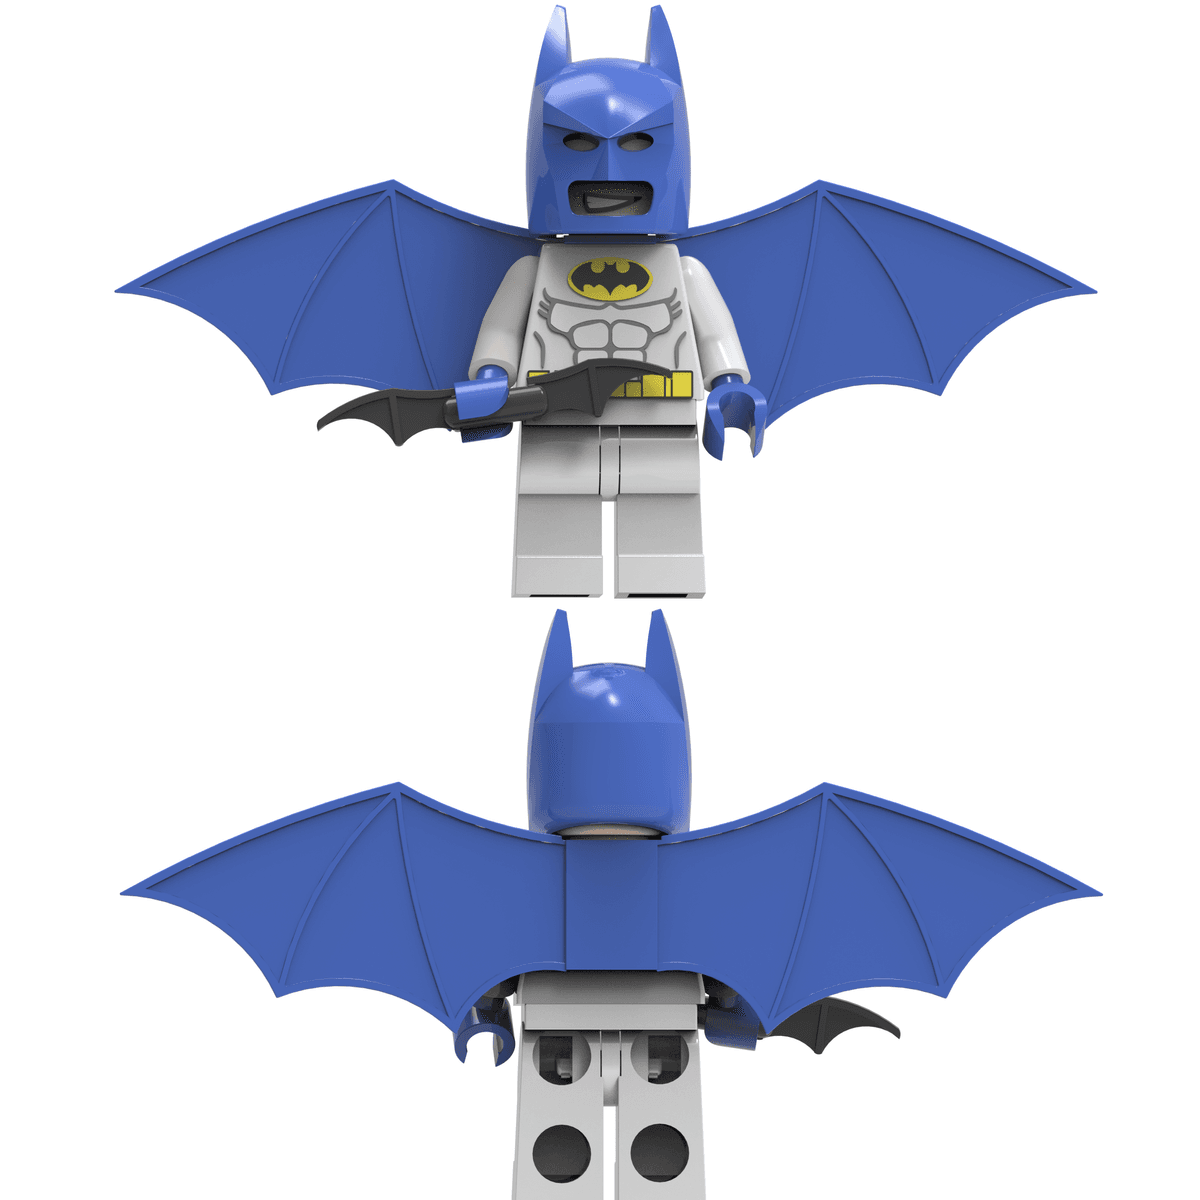 3D print Lego - Moto Batman • made with I3 MK3S・Cults